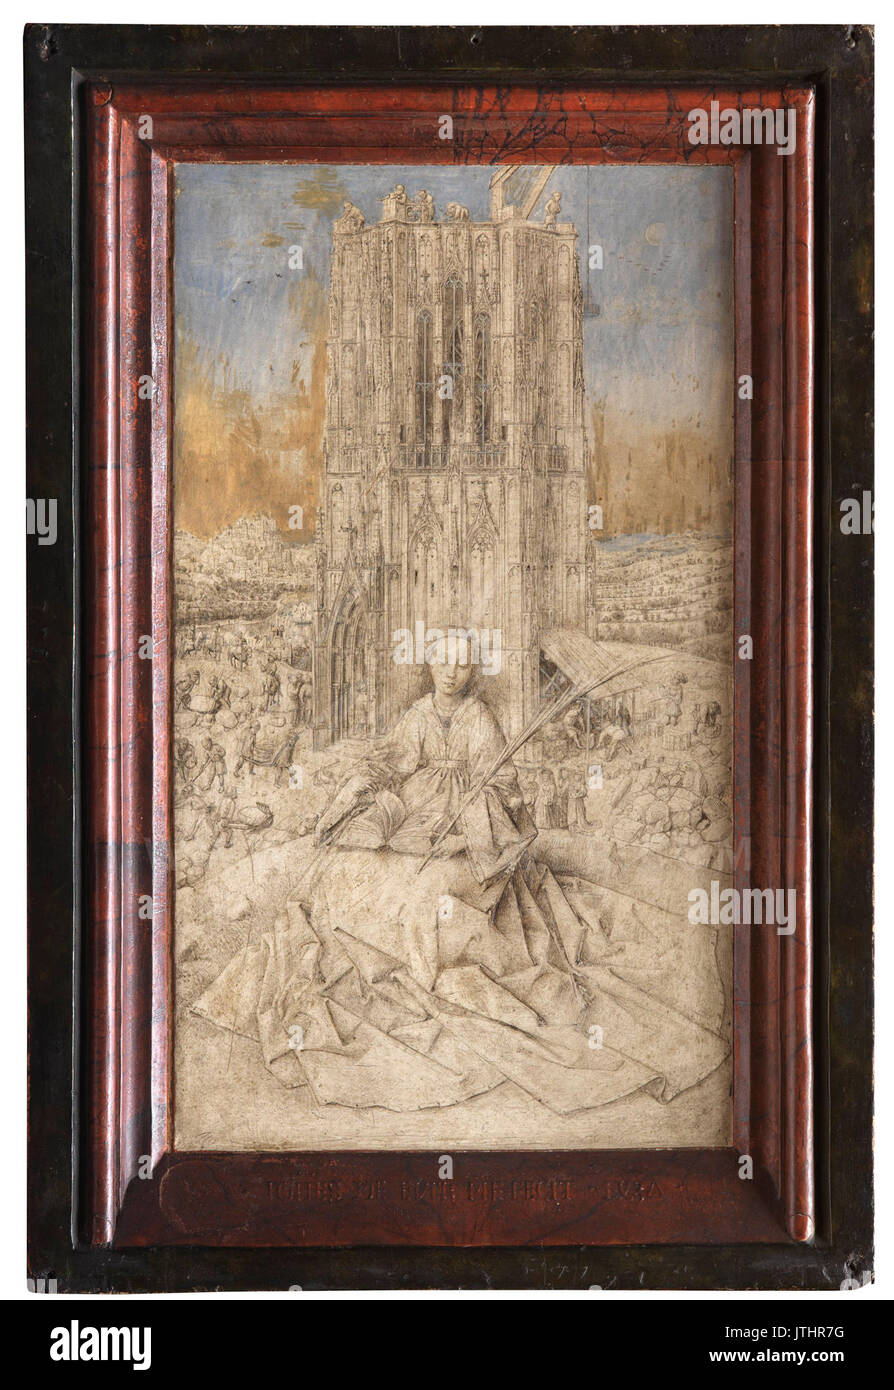 Saint Barbara of Nicodemia   Jan van Eyck   1437 Stock Photo